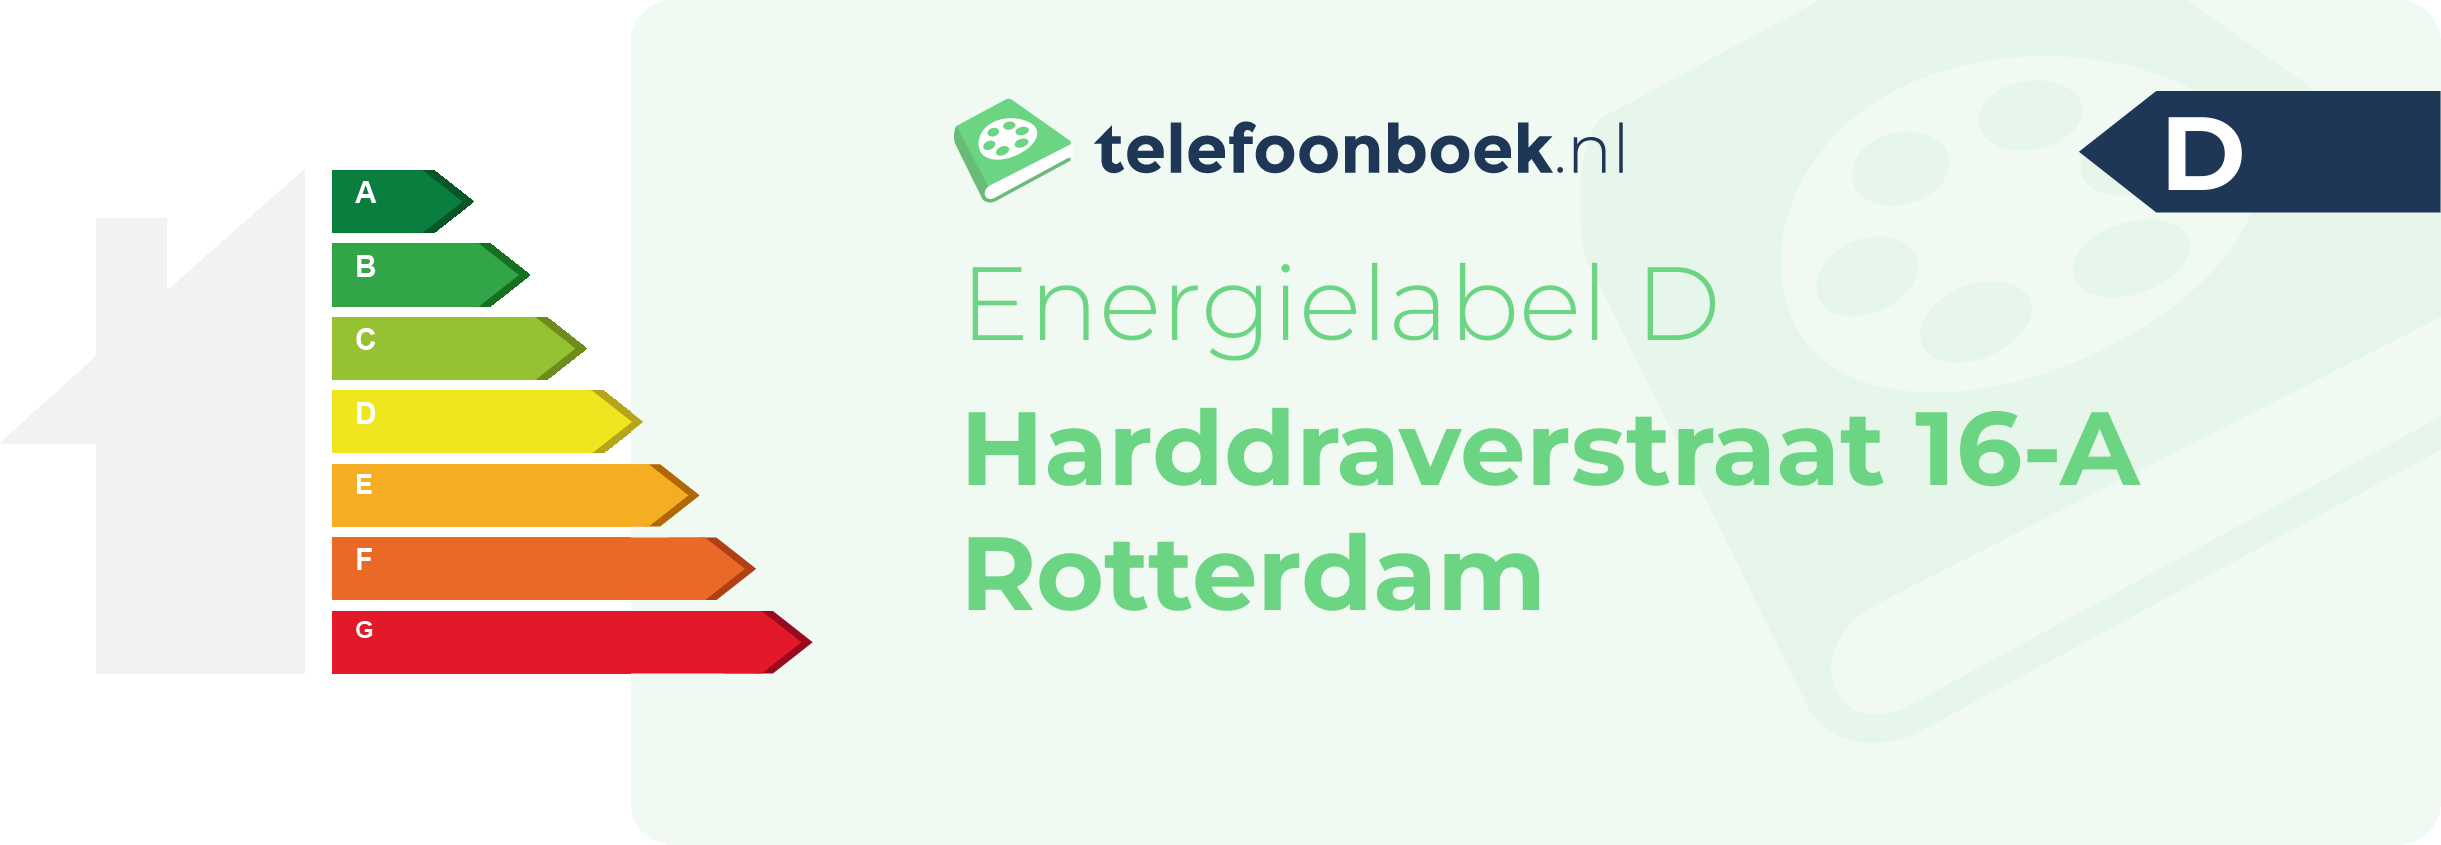 Energielabel Harddraverstraat 16-A Rotterdam